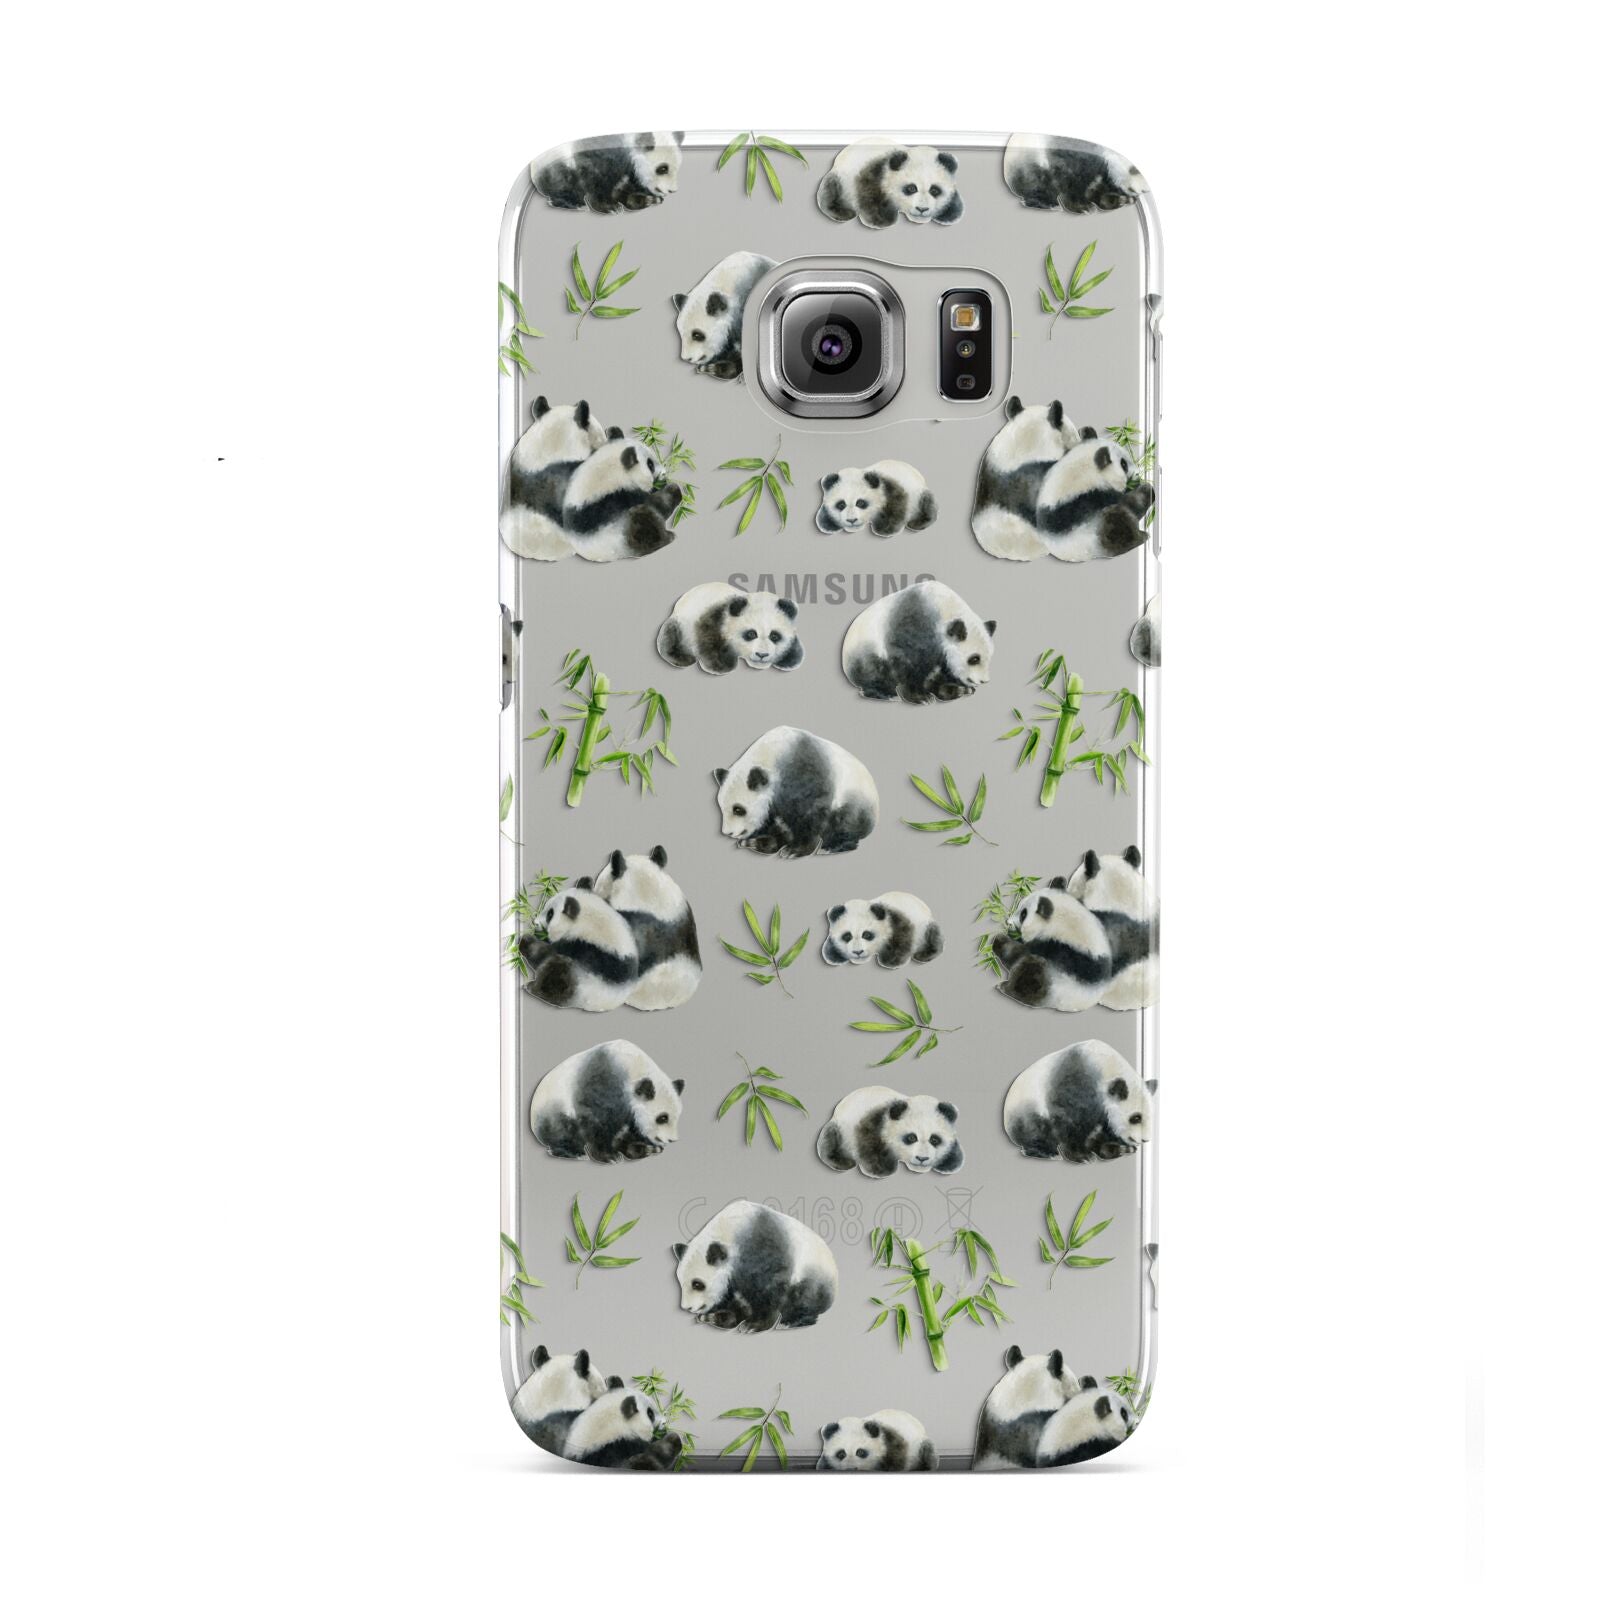 Panda Samsung Galaxy S6 Case